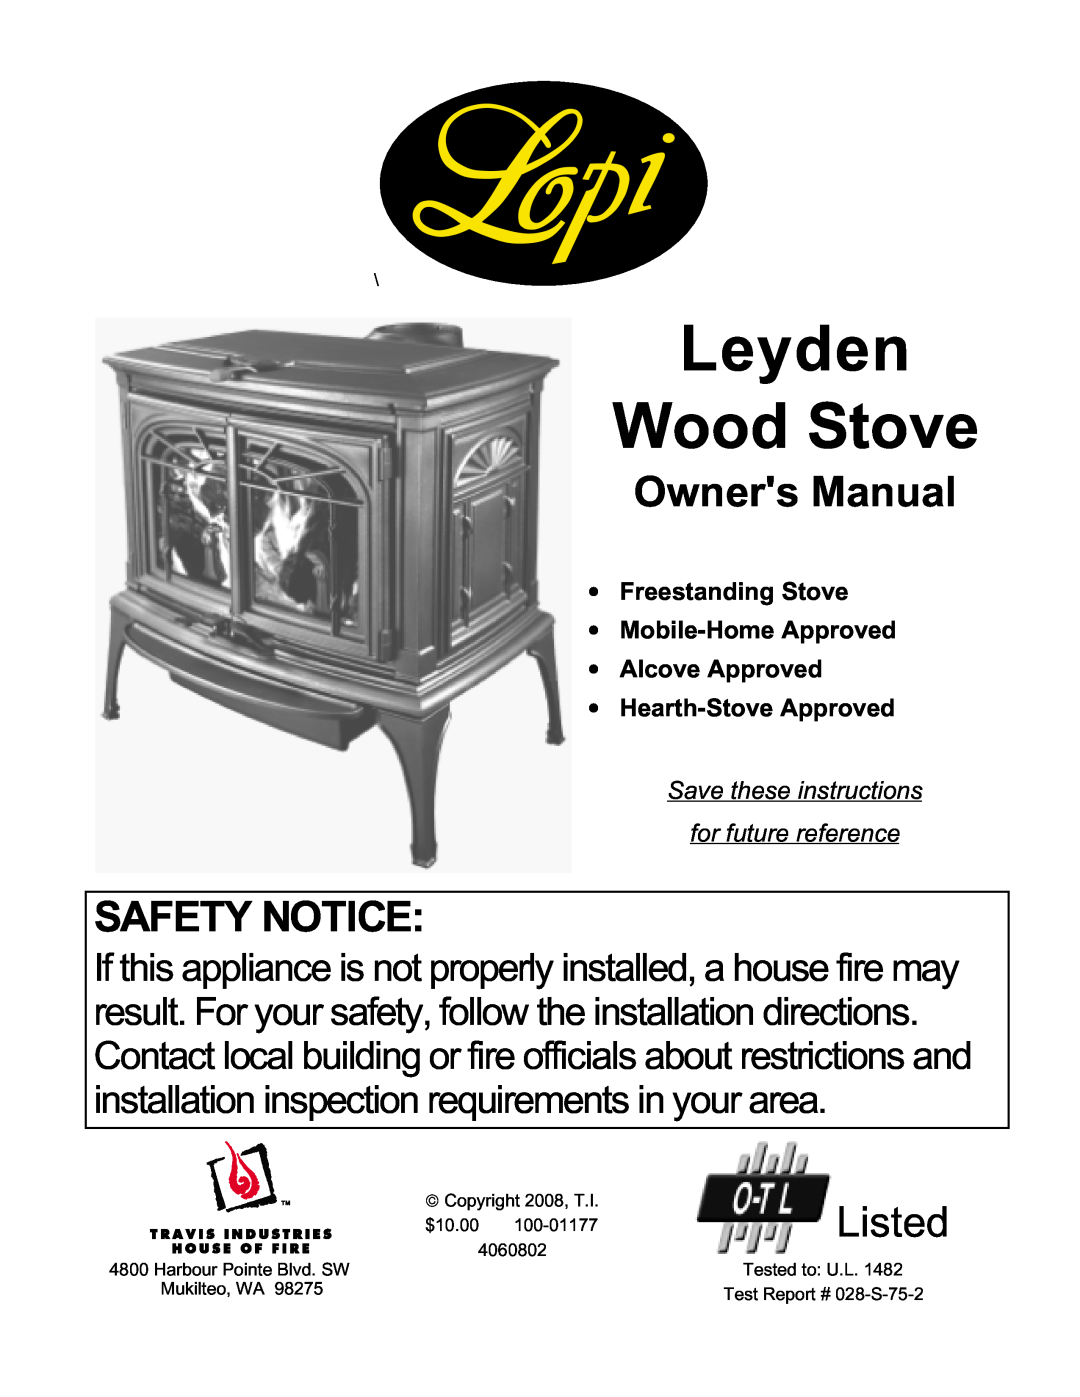 Lopi owner manual Leyden Wood Stove, Safety Notice, Listed 